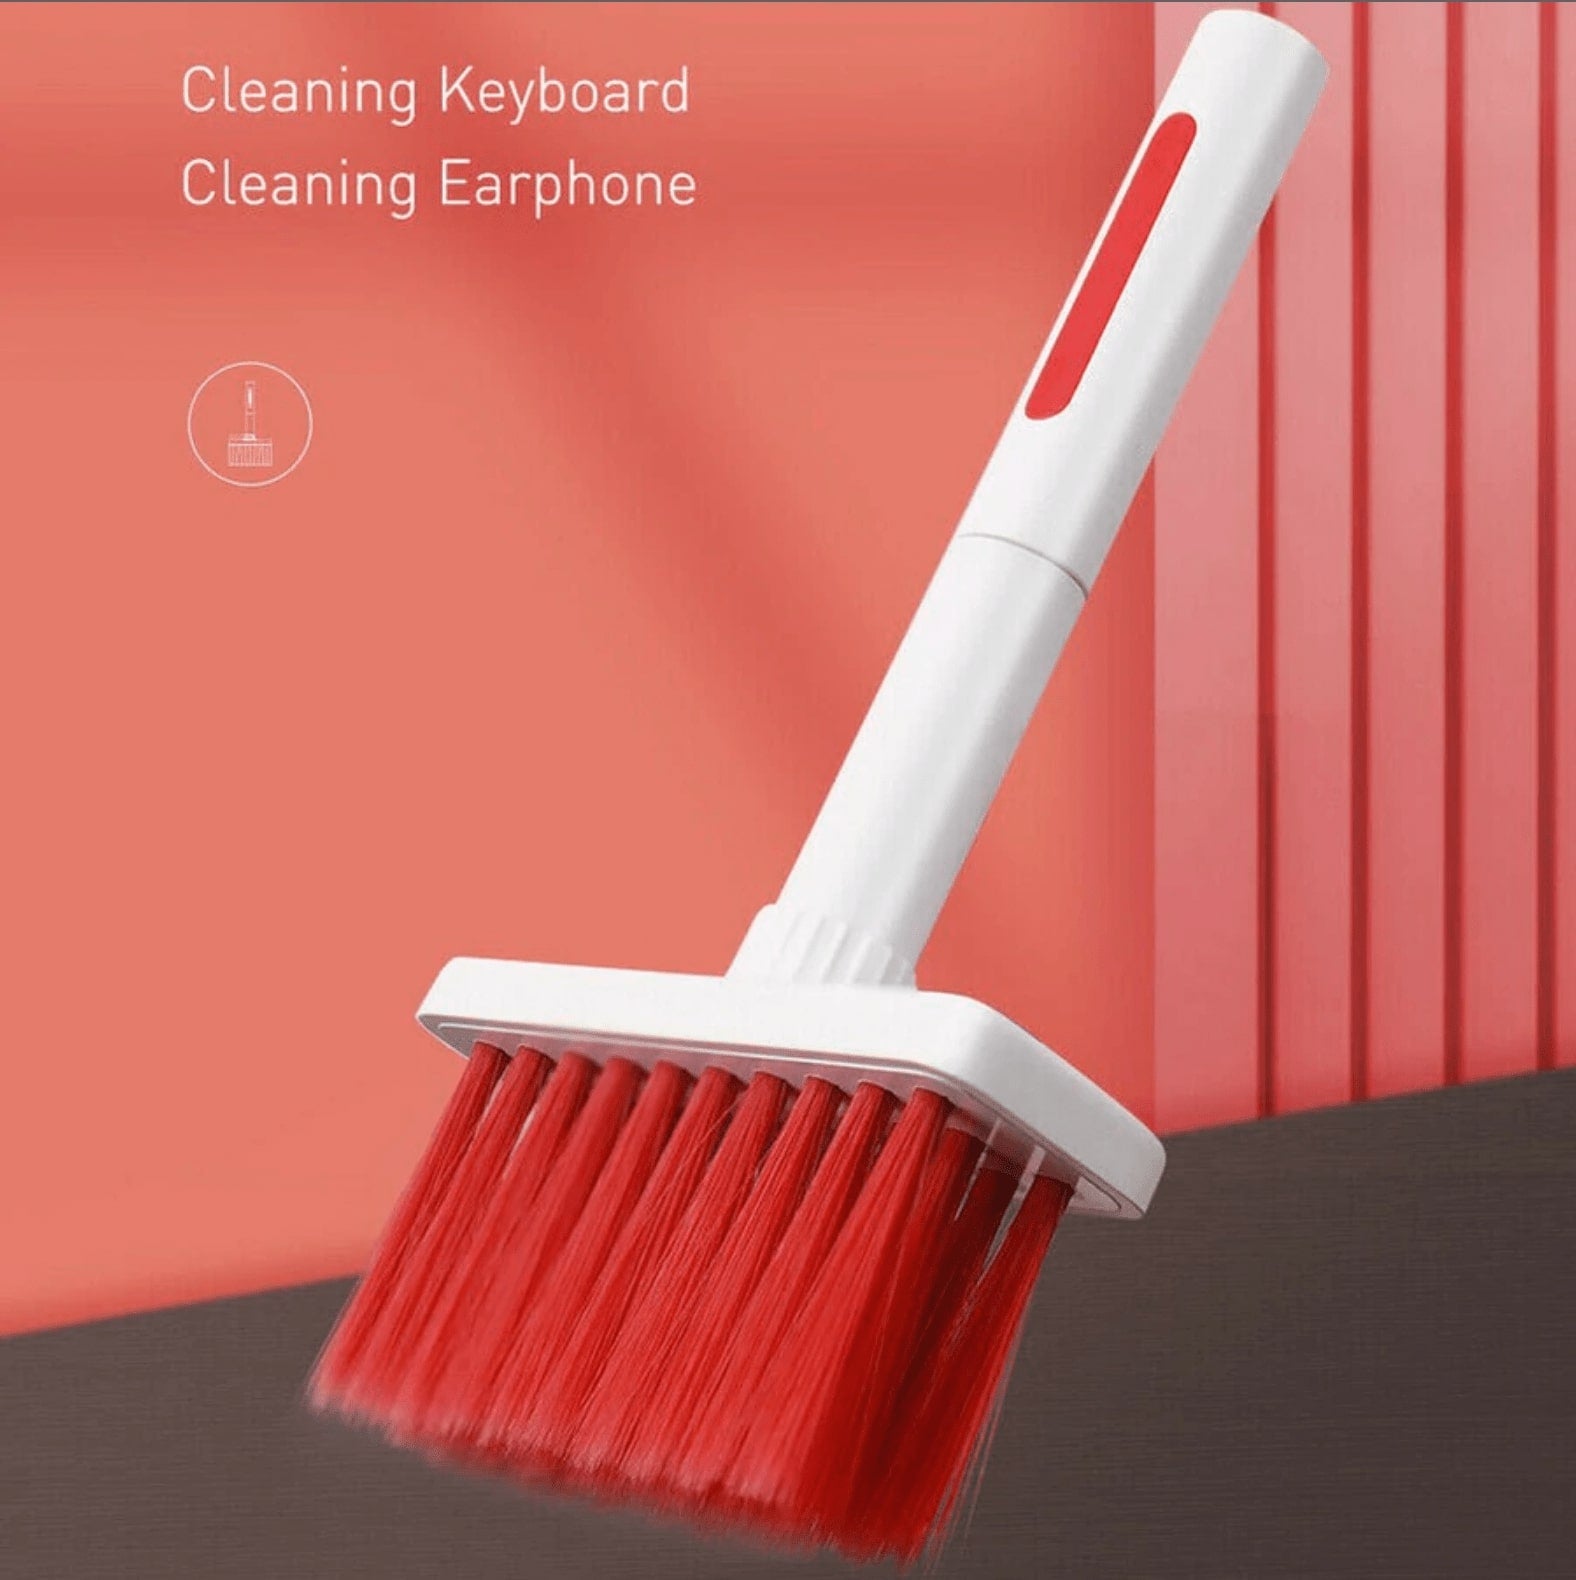 5 in 1 Keyboard Earphone Cleaning Brush Set